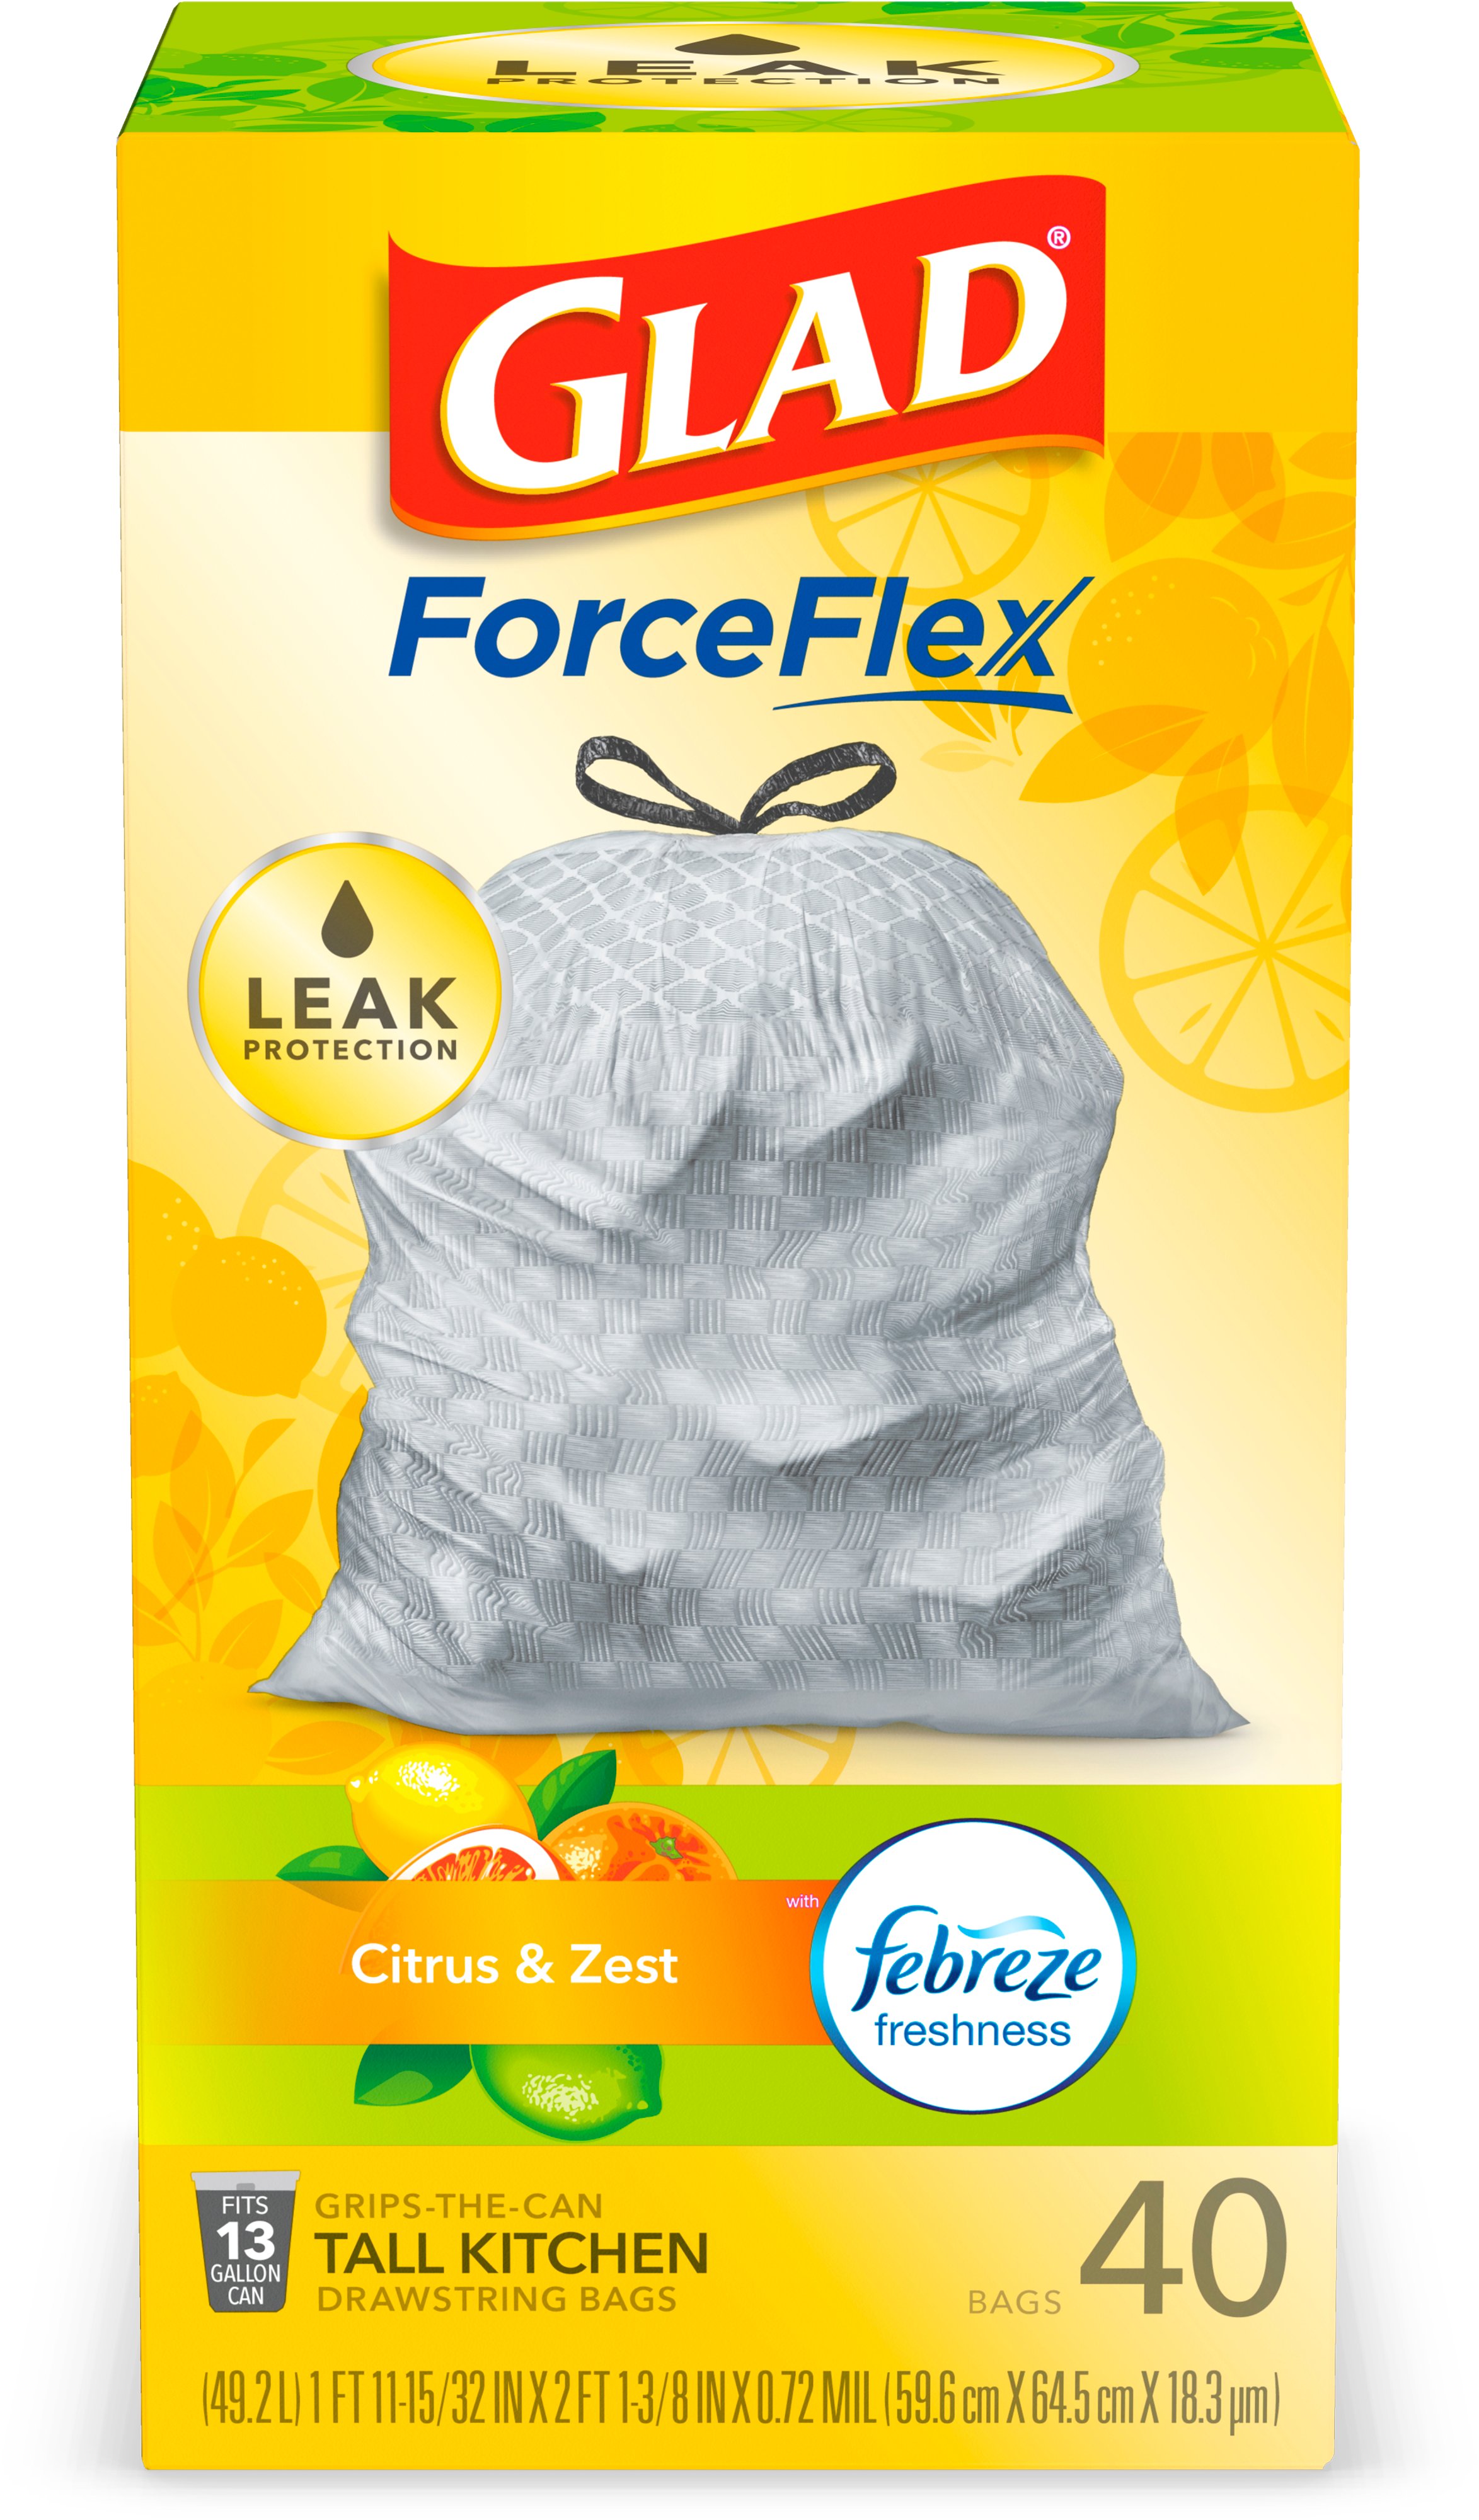 Glad ForceFlex Febreze Citrus & Zest Scent Drawstring Tall Kitchen 13  Gallon Trash Bags